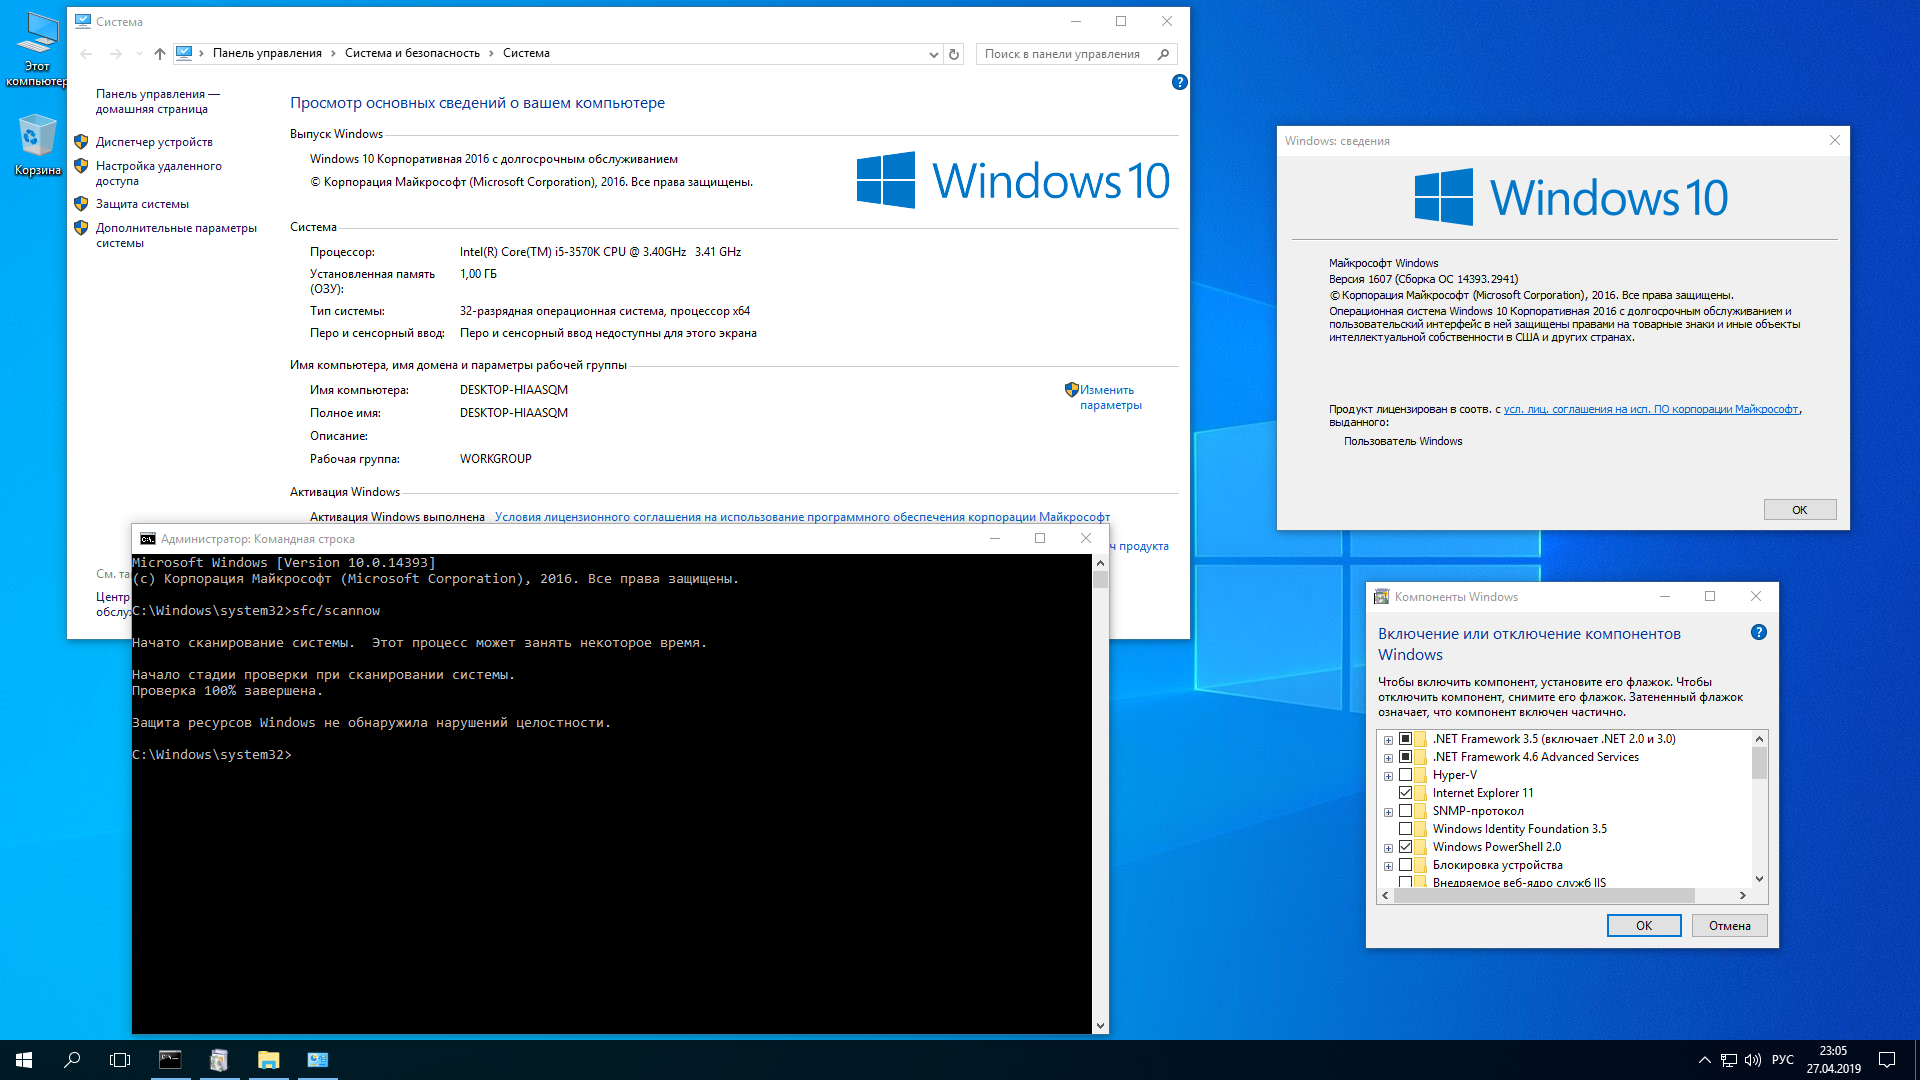 windows 10 enterprise ltsb 2016 iso torrent